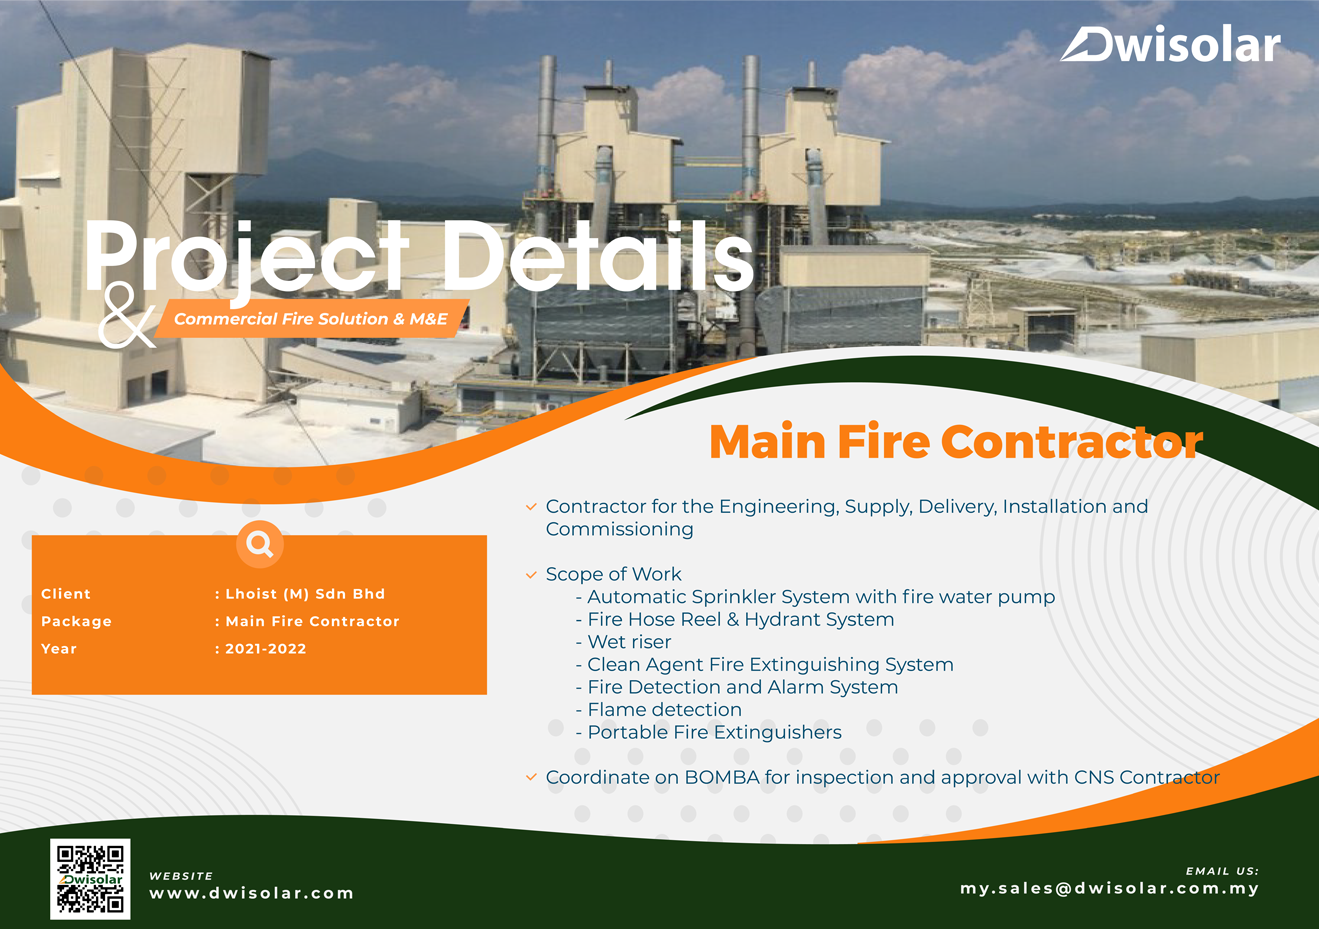 Project Details Commercial Fire Solution & M&E 5.png